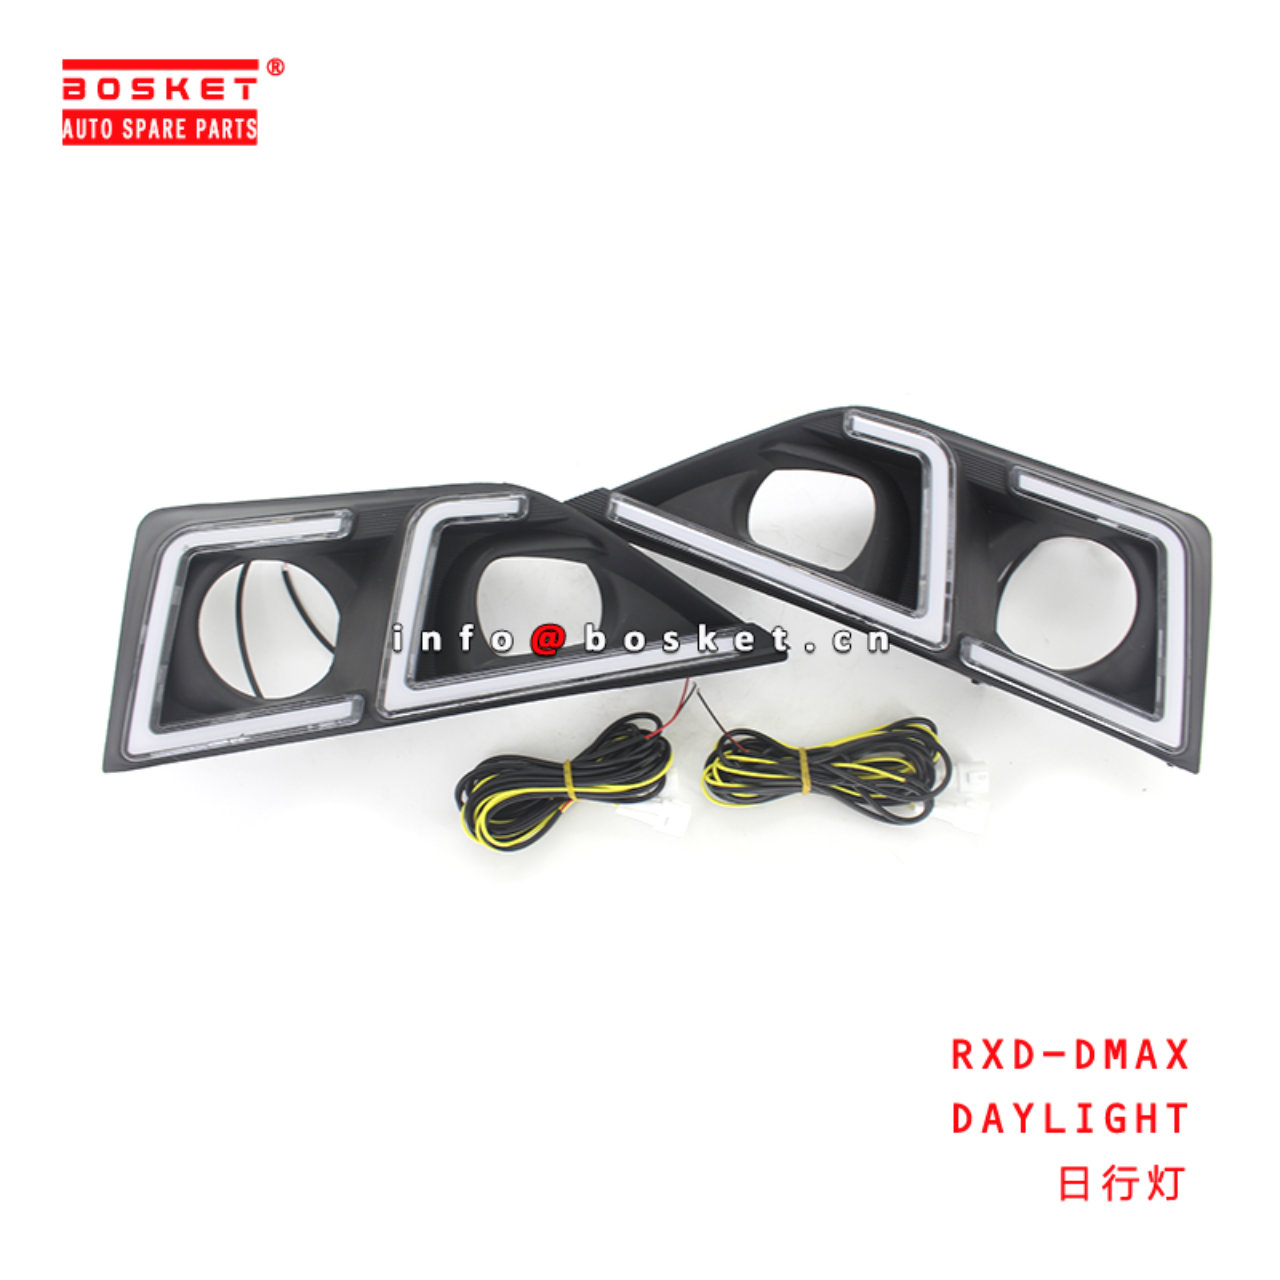 RXD-DMAX Daylight Suitable for ISUZU DMAX RXD-DMAX